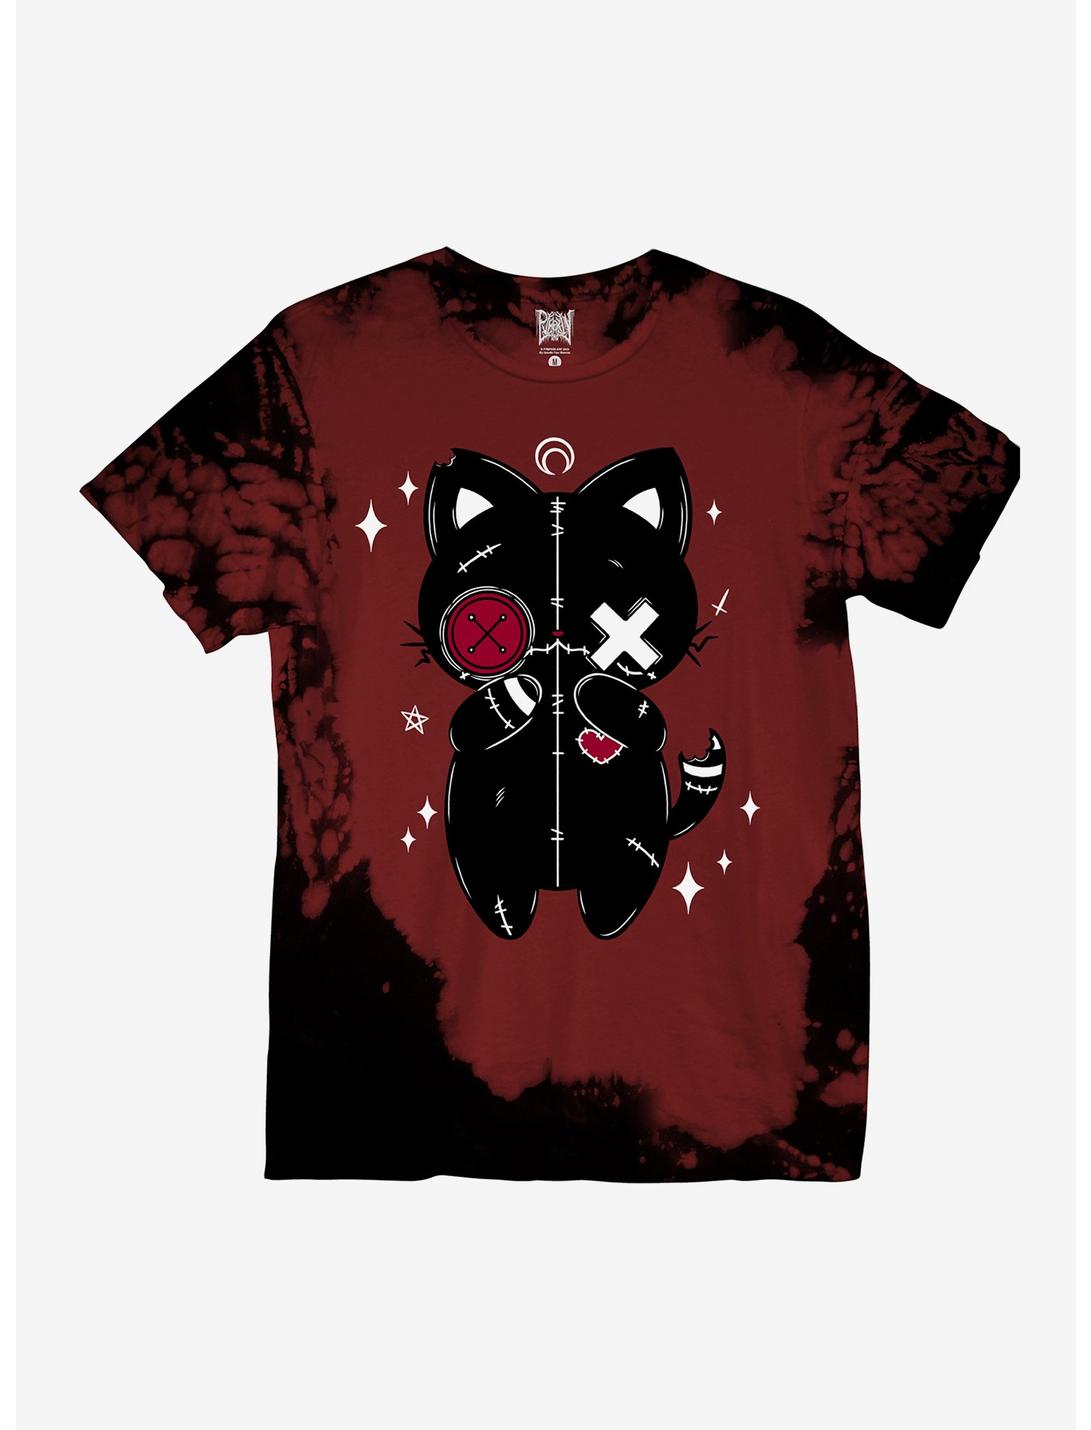 Stitched Cat Tie-Dye Boyfriend Fit Girls T-Shirt By Pvmpkin Art, MULTI, hi-res